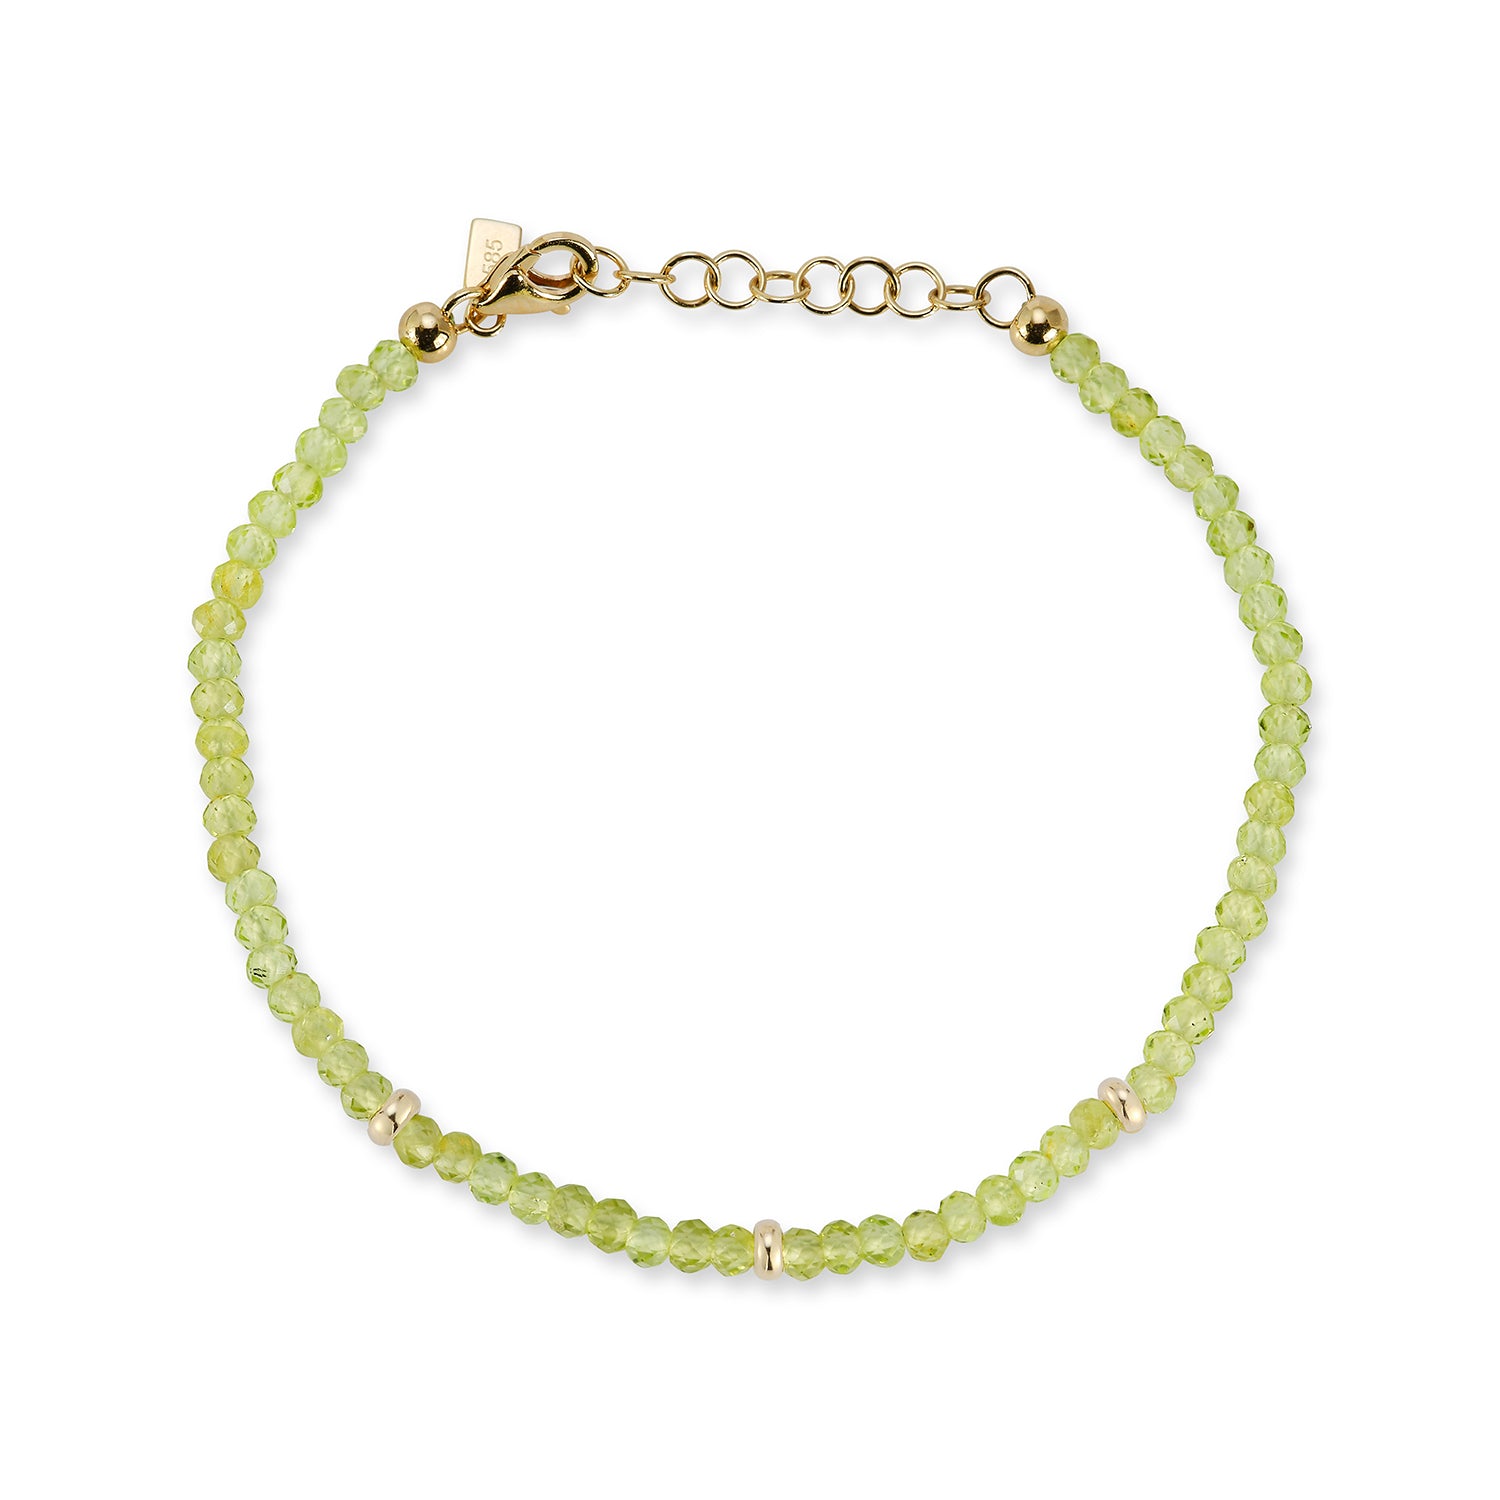 The Beaded Bracelet Gift Set - Periodt / August Option